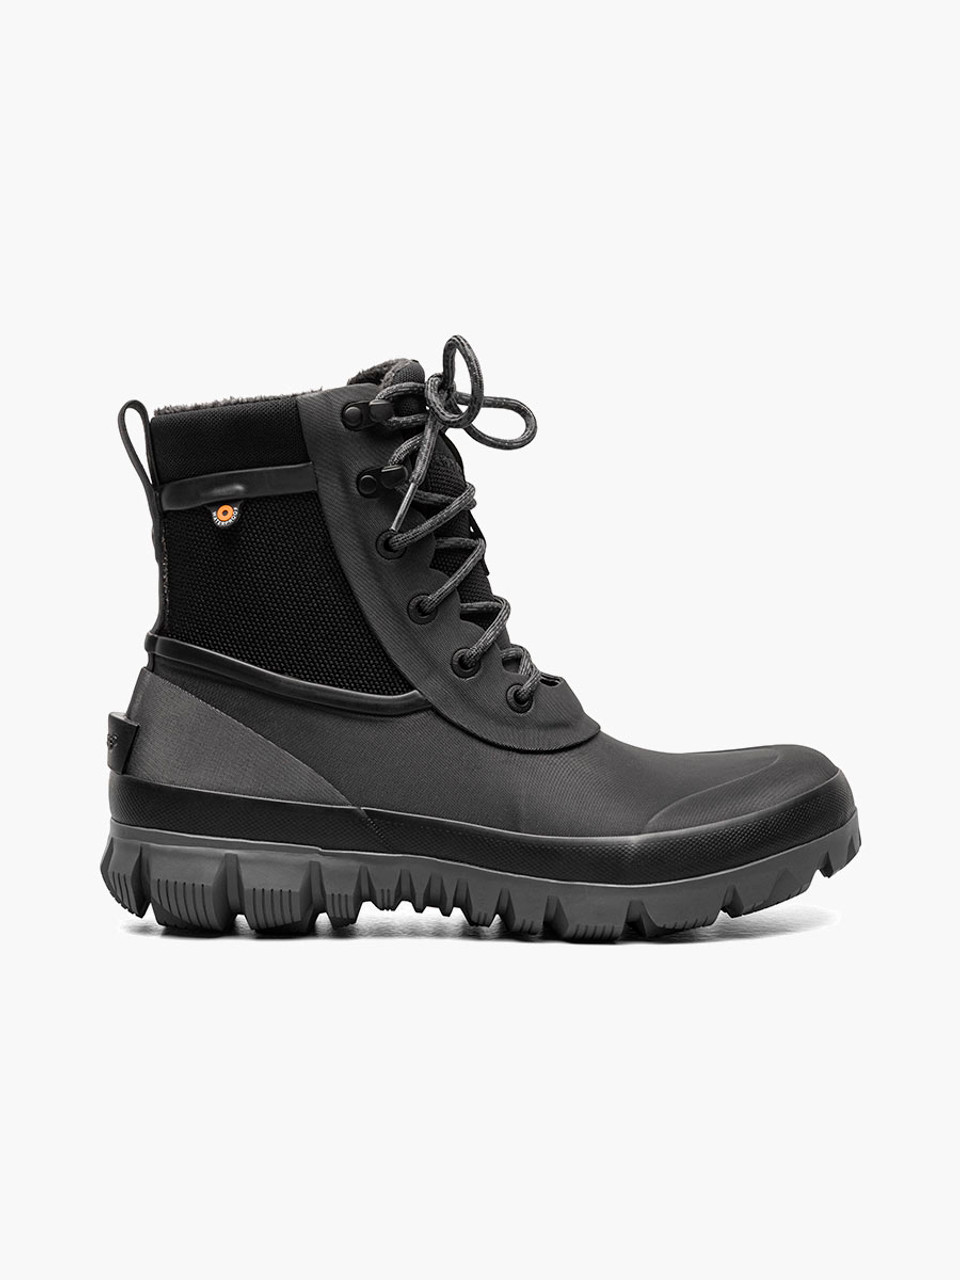 Men's Bogs Arcata Urban Lace Winter Boot - Herbert's Boots and Western Wear